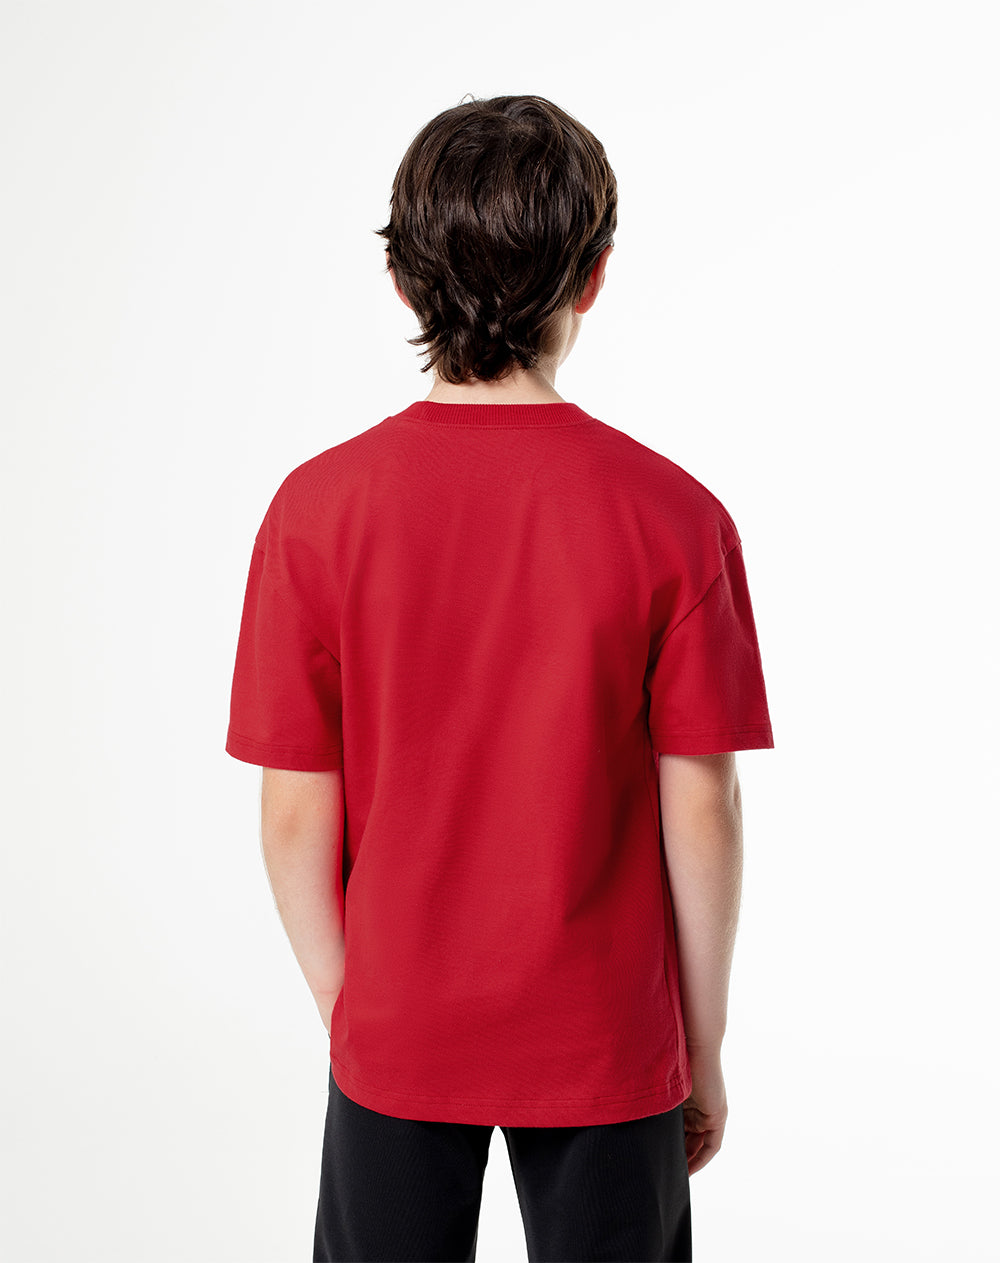 Camiseta fit manga corta roja